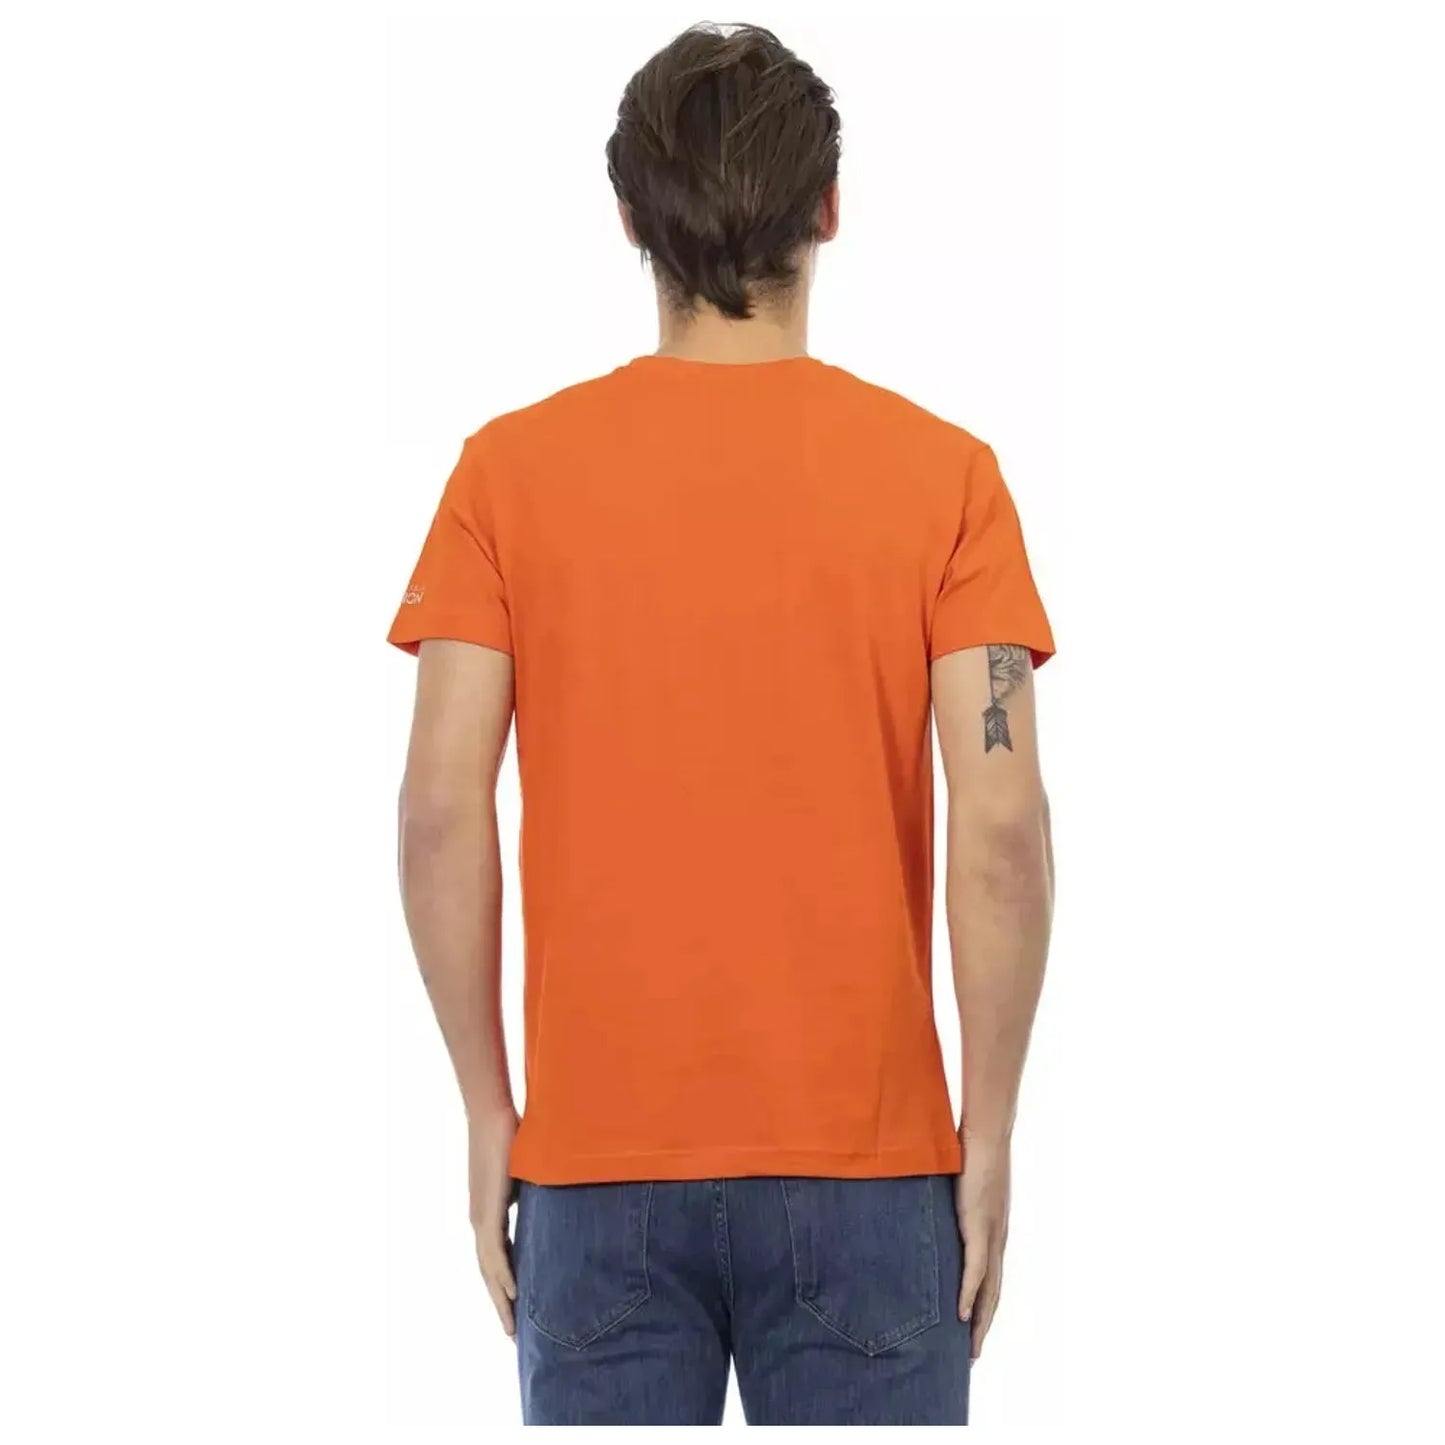 Trussardi Action Orange V-Neck Tee with Graphic Charm orange-cotton-t-shirt-6 product-22881-1530724126-18-4acd5b4f-244.webp